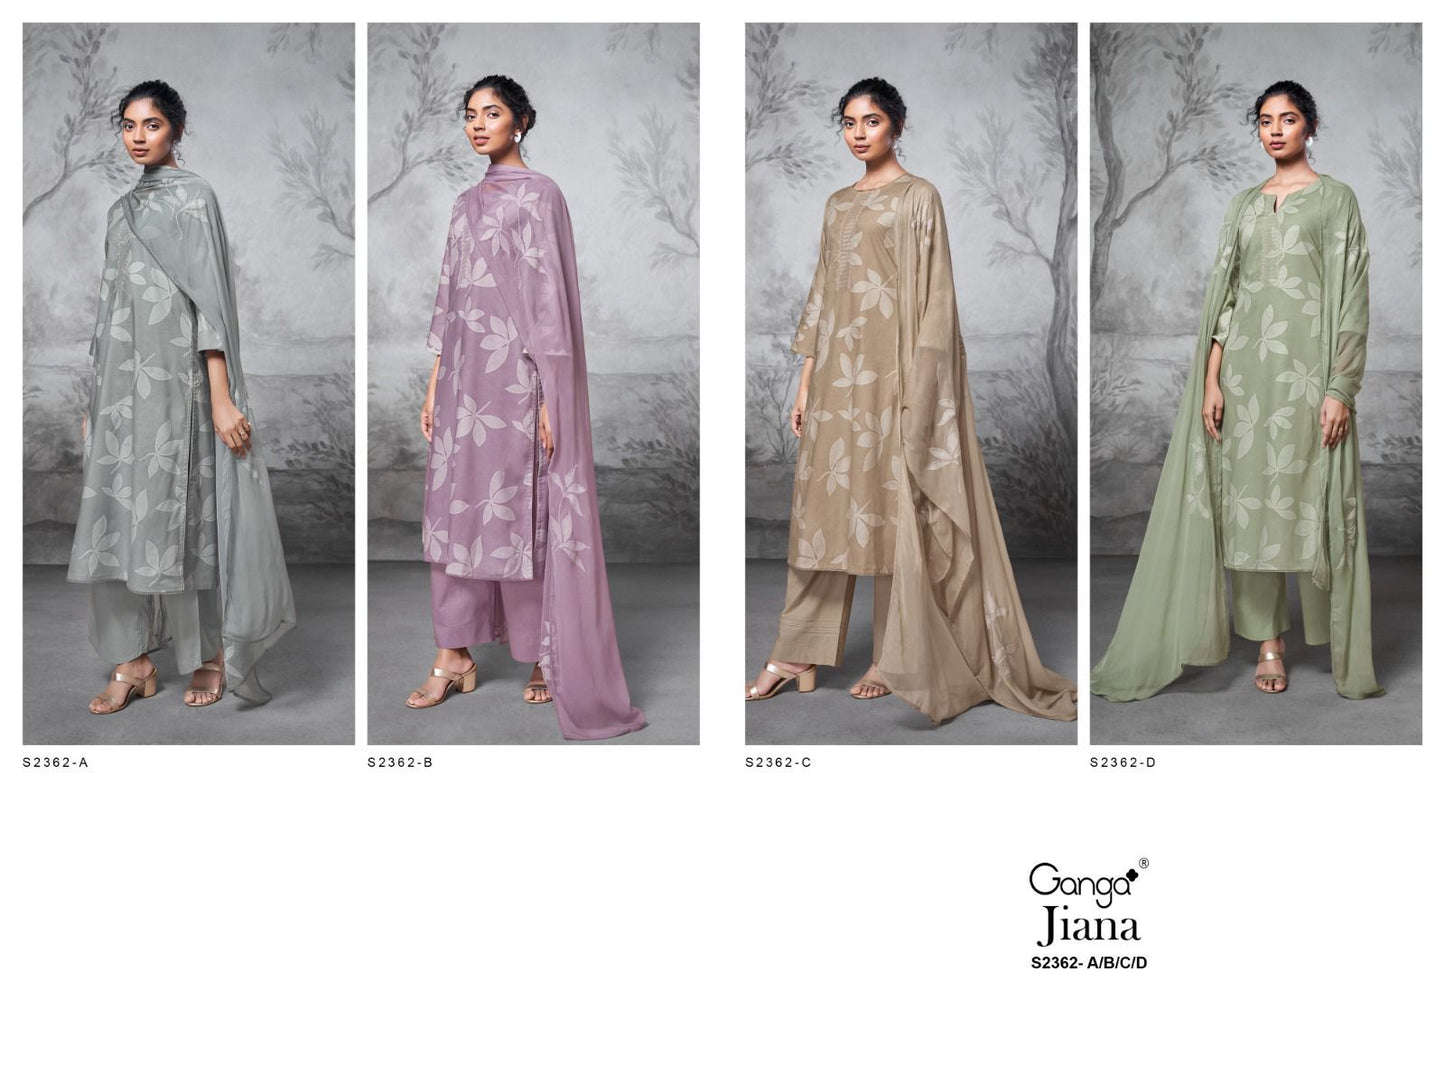 Jiana-2362 Ganga Premium Cotton Plazzo Style Suits